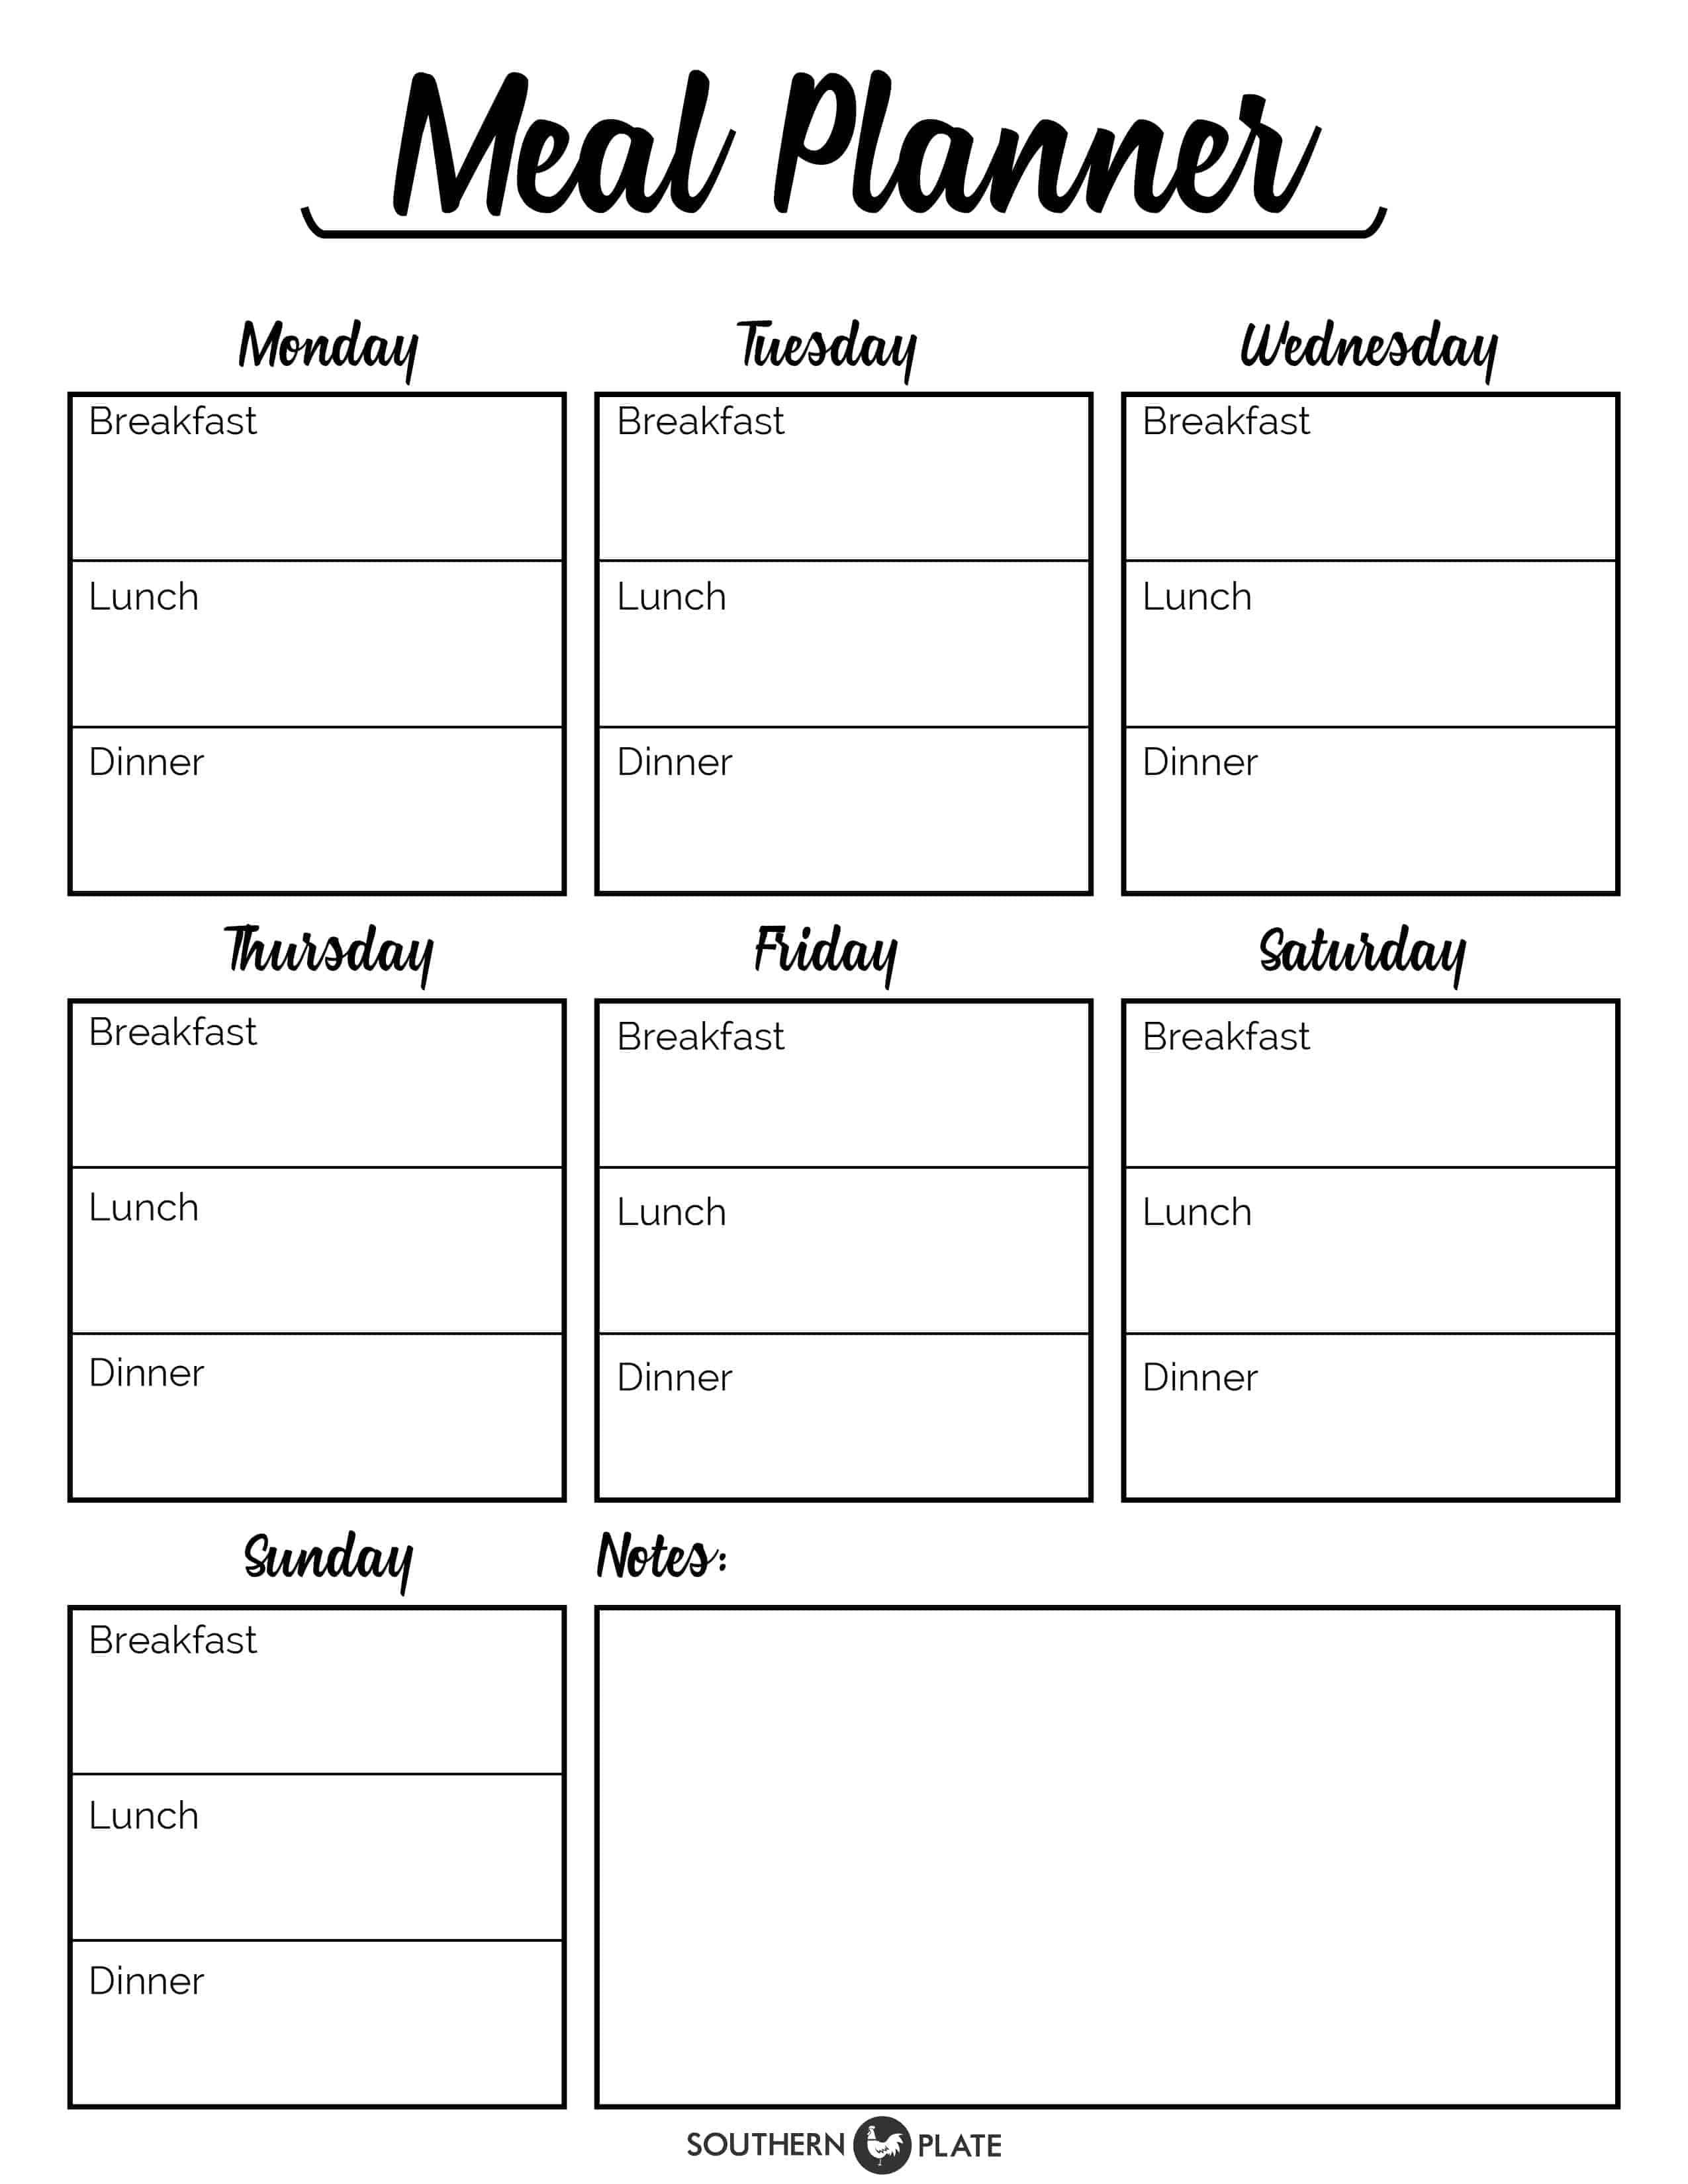 free-printable-menu-planner-sheet-southern-plate